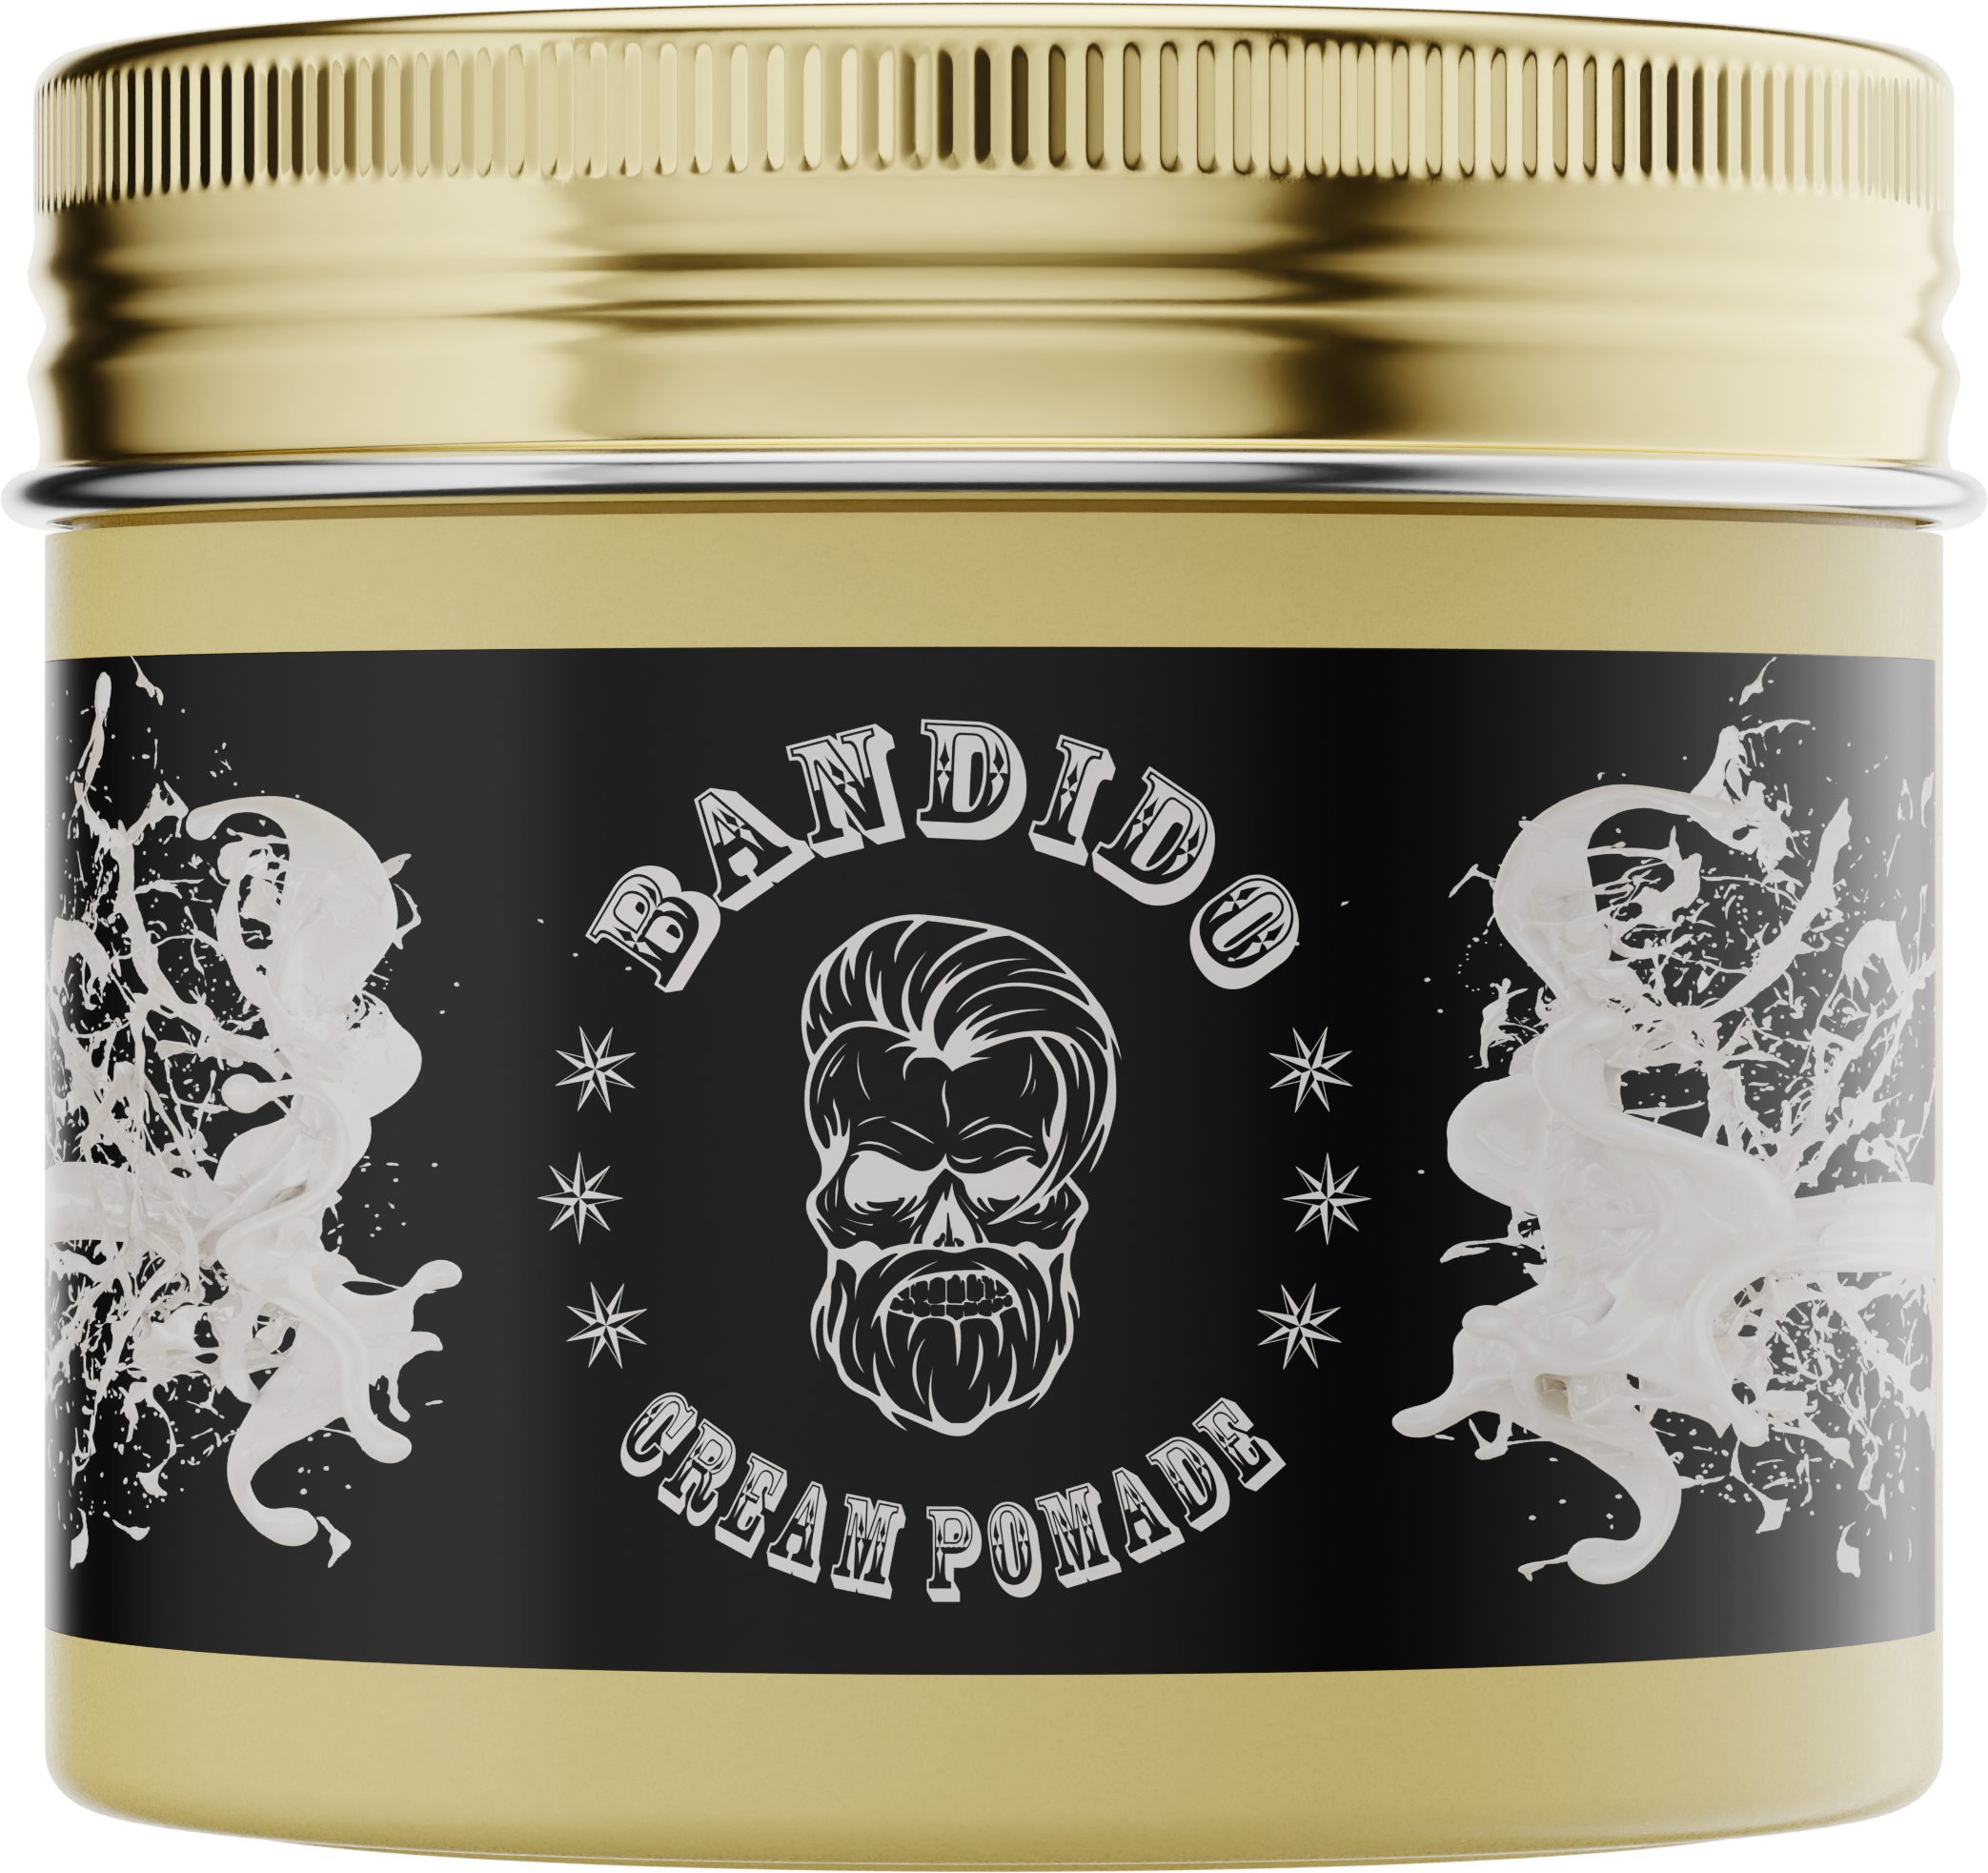 Haarpomade Cream Haarpomade Cosmetics Bandido Pomade Bandido 125ml